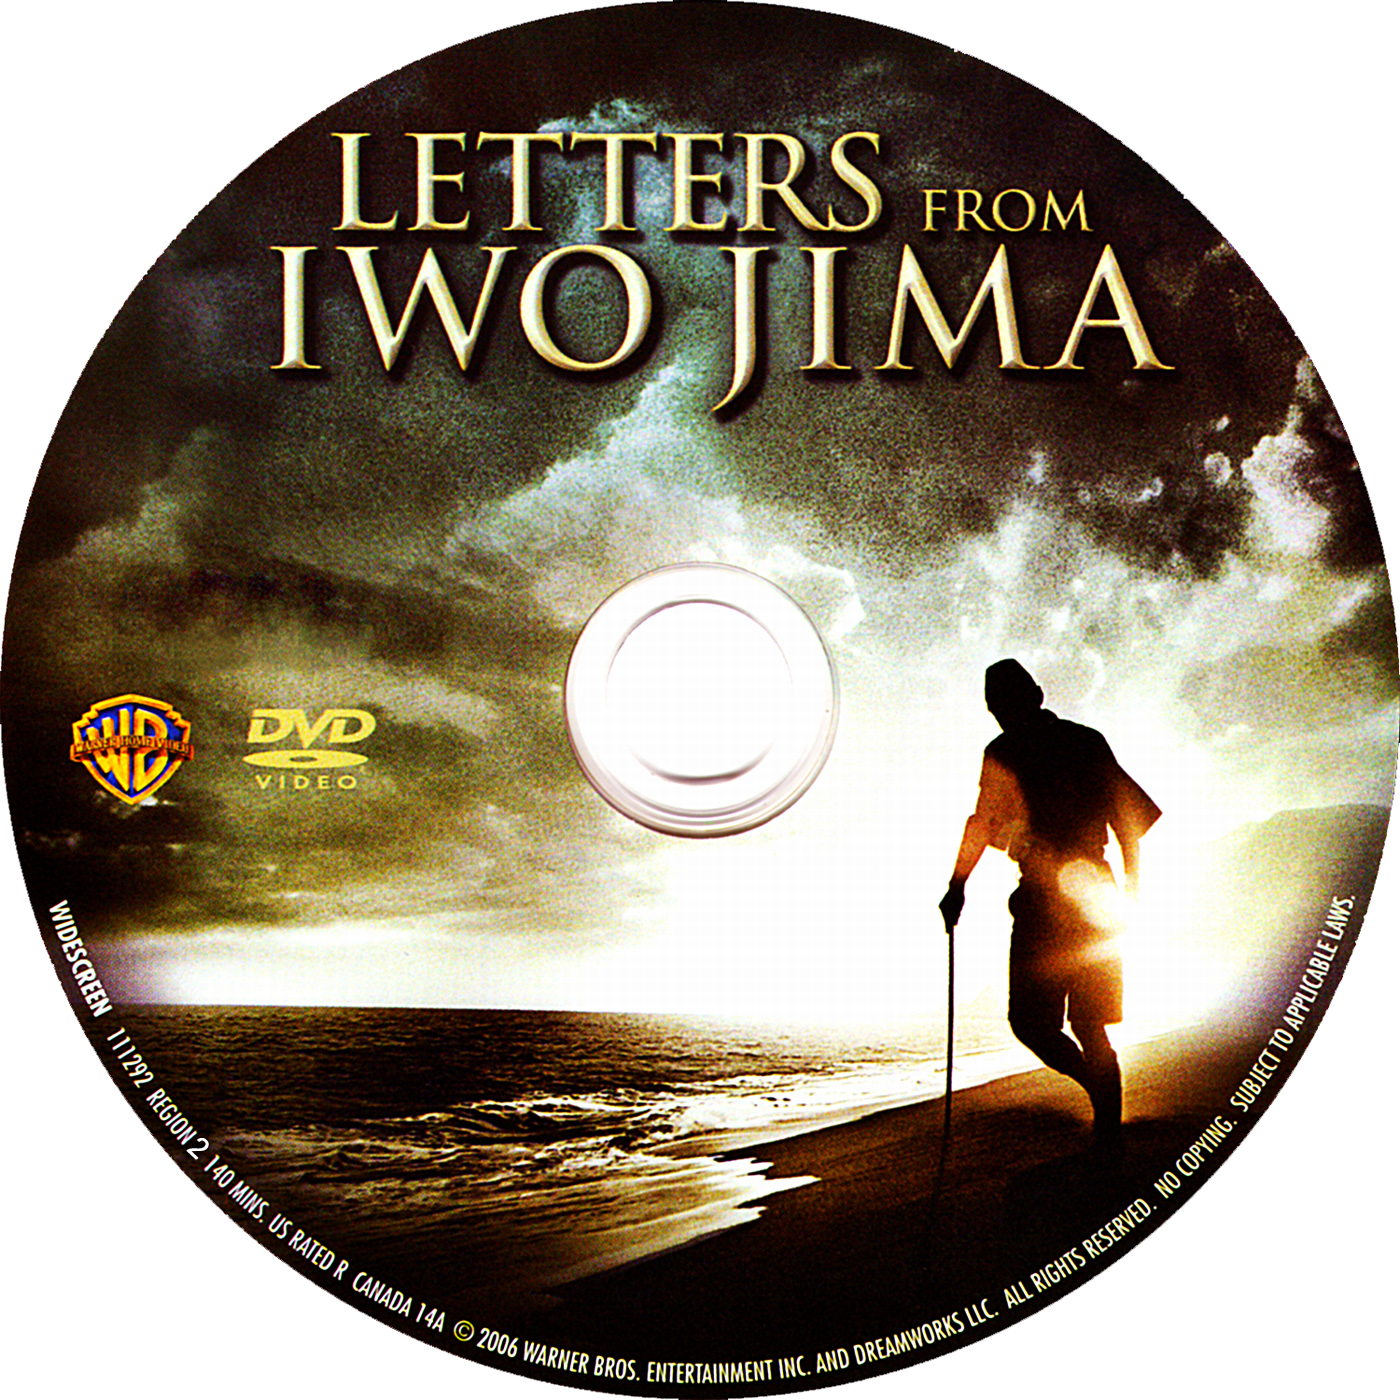 letters from iwo jima full